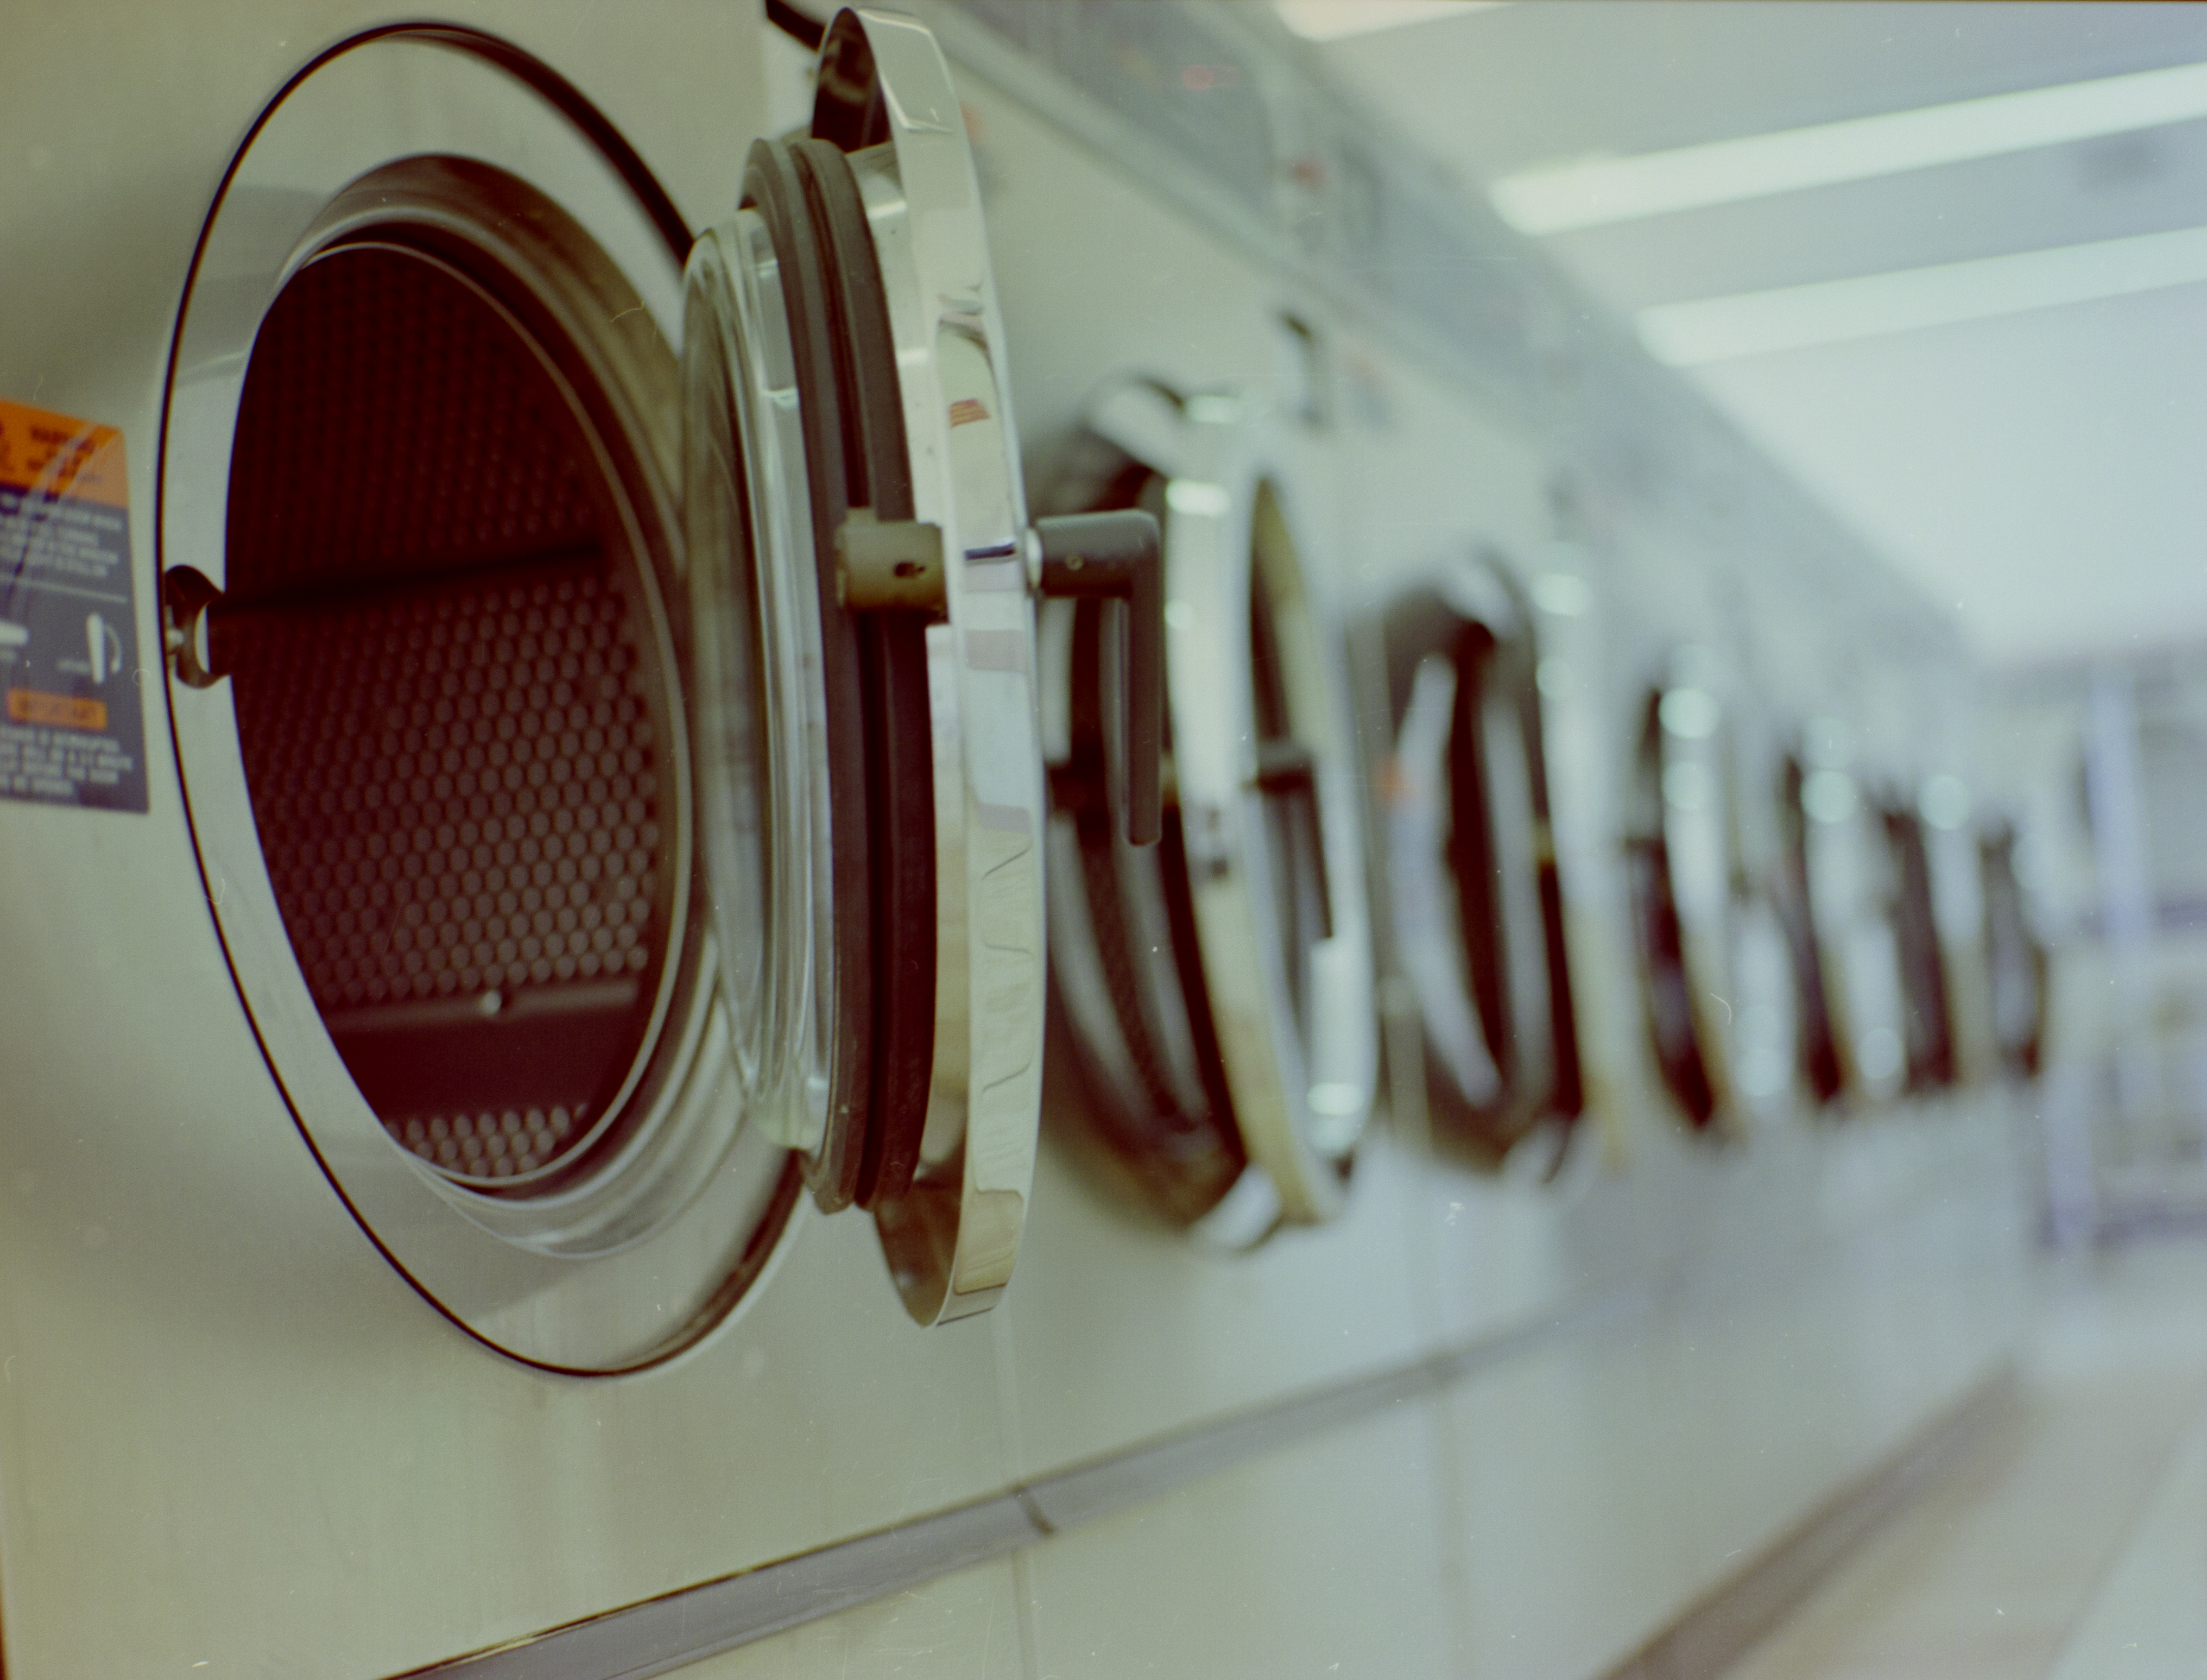 Laundry machine (wikimedia)